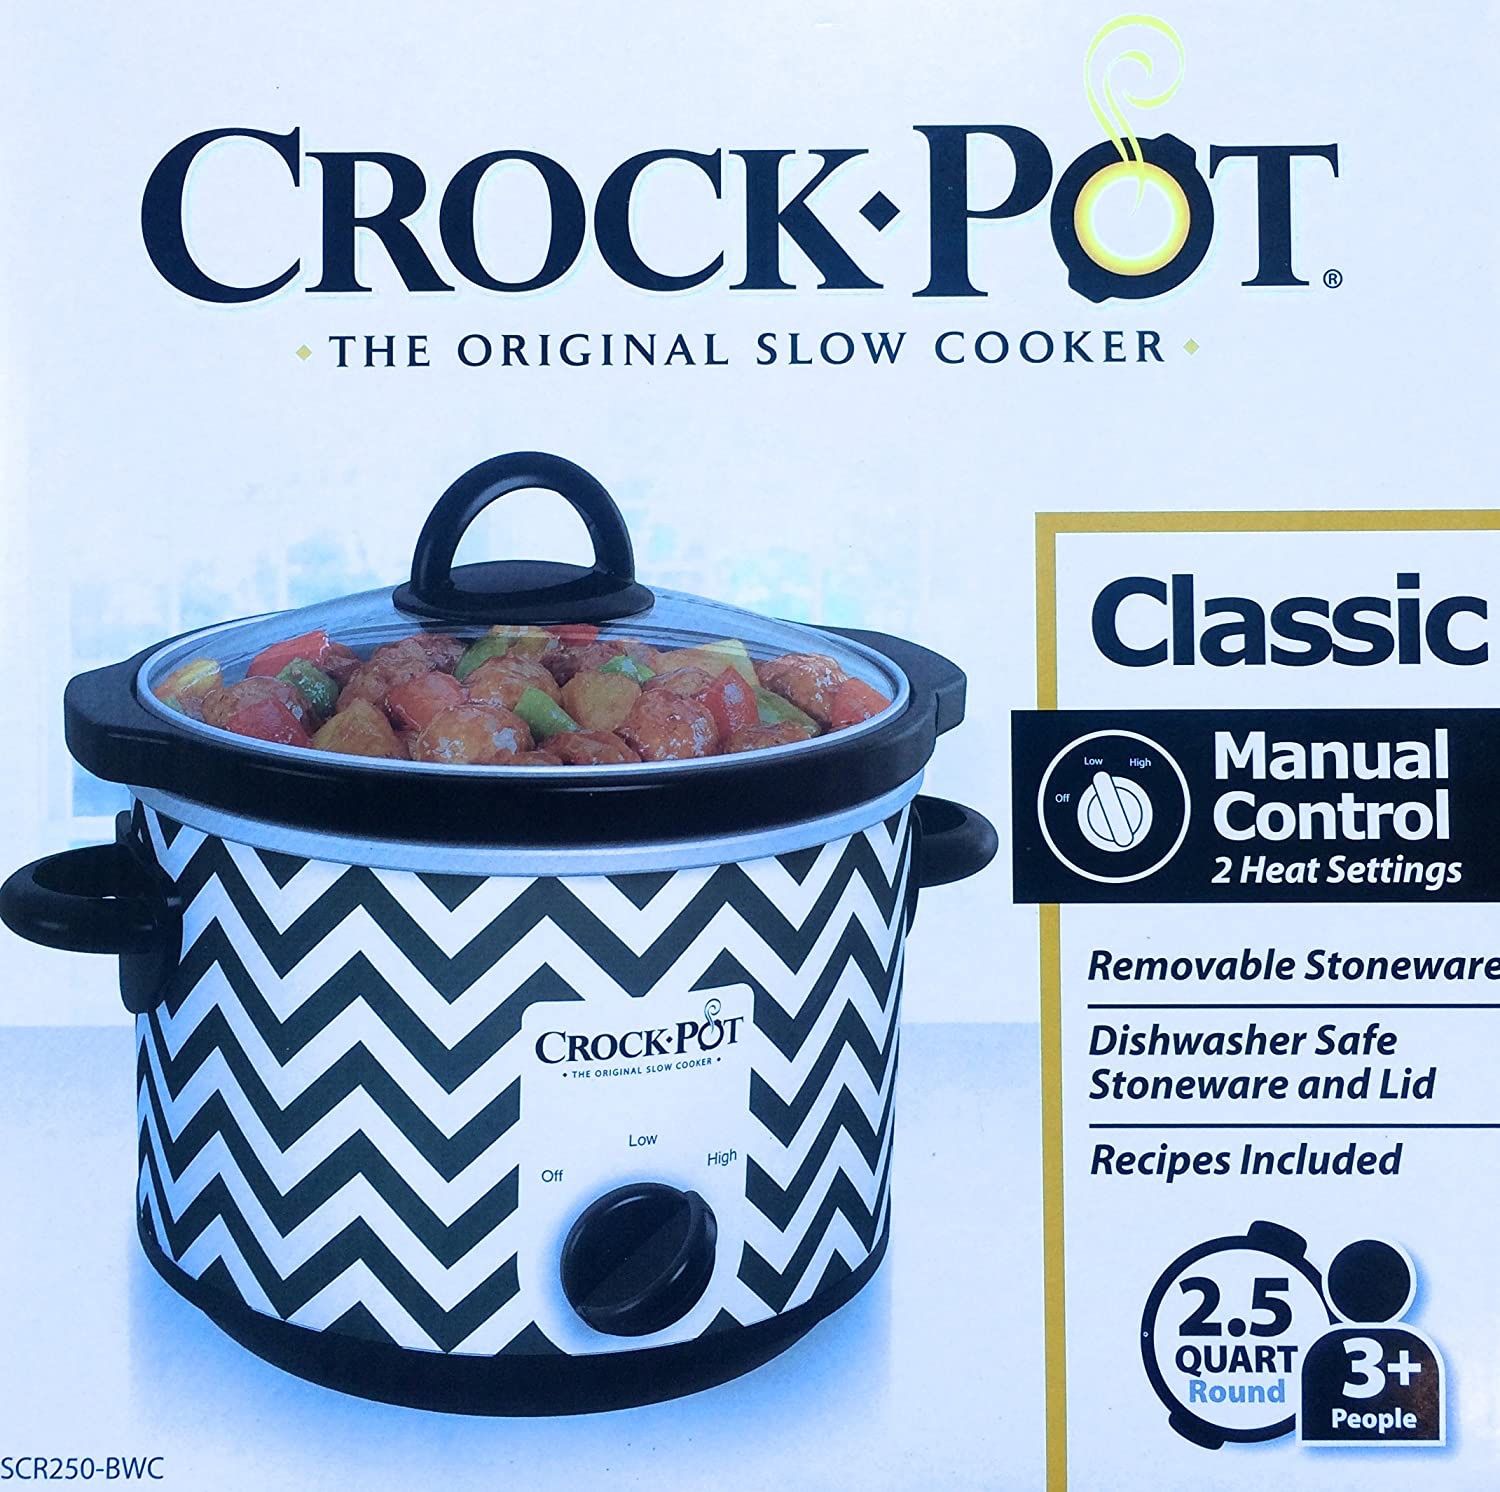 Crockpot NEW NEW Round Slow Cooker, 4.5 quart, Black & White Pattern